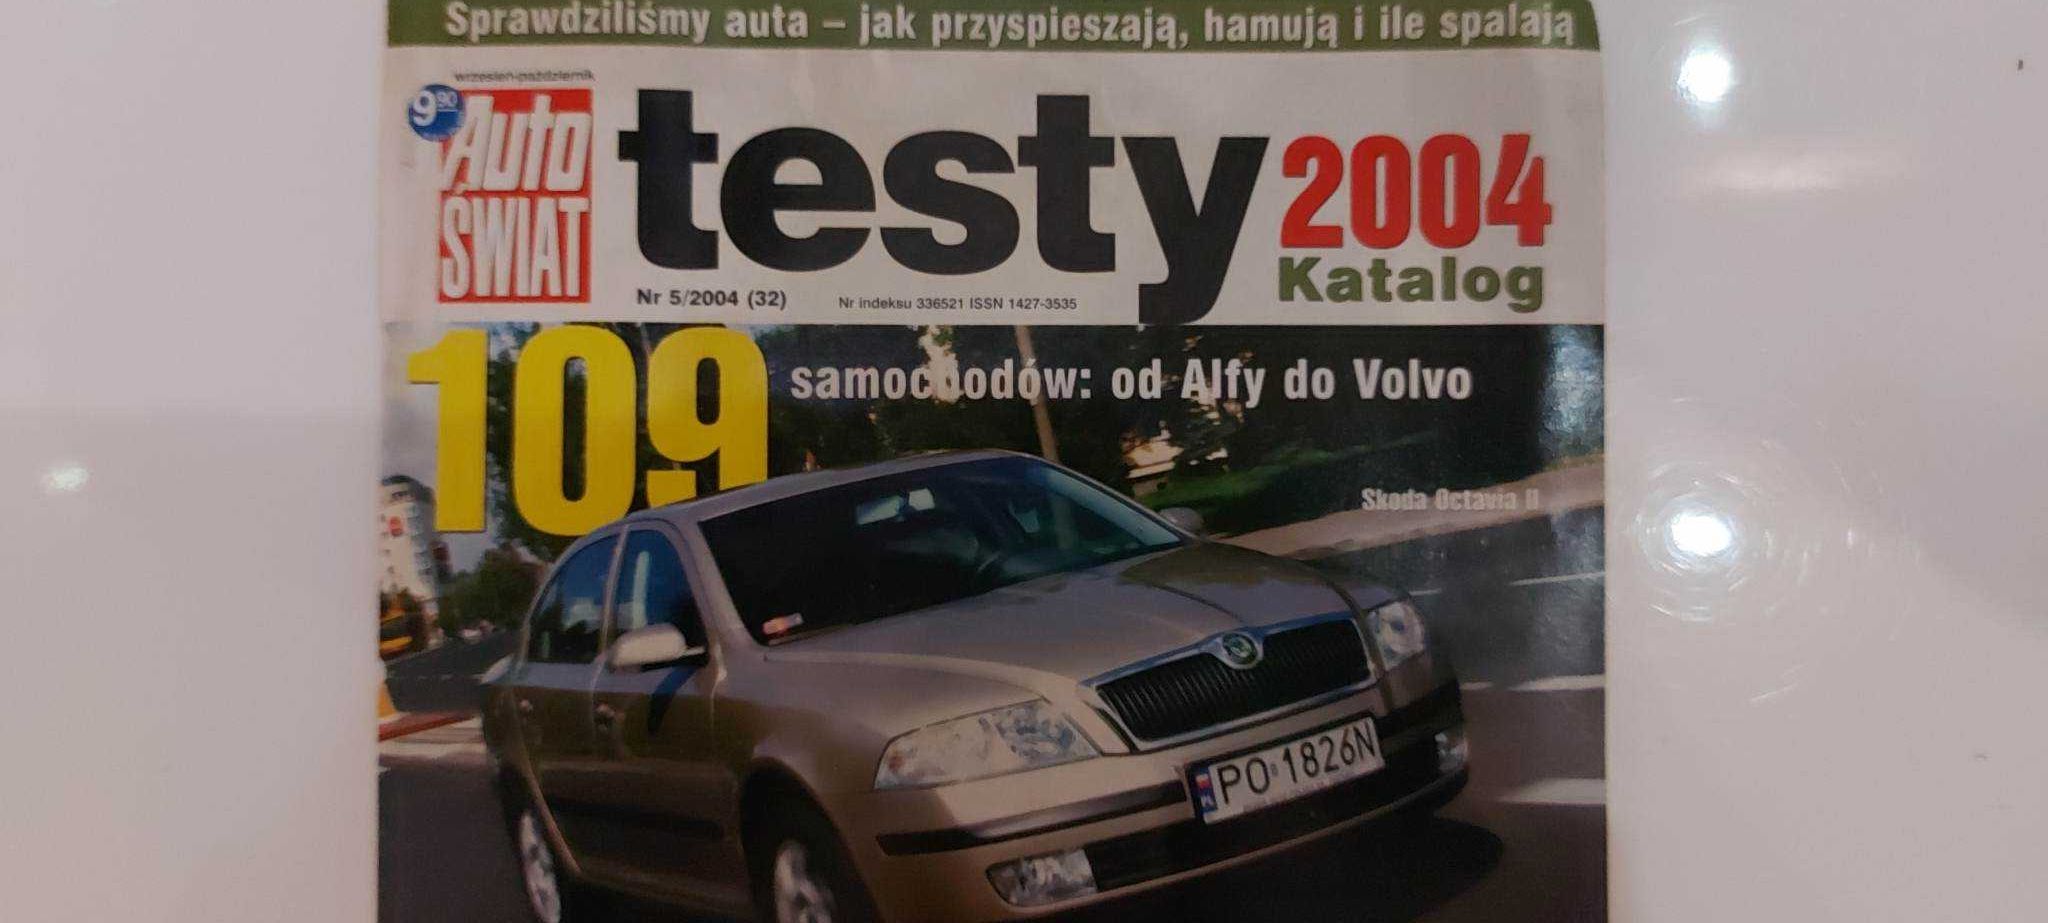 testy AUTO ŚWIAT 2004 katalog od Alfy Romeo do Volvo SUPER OKAZJA